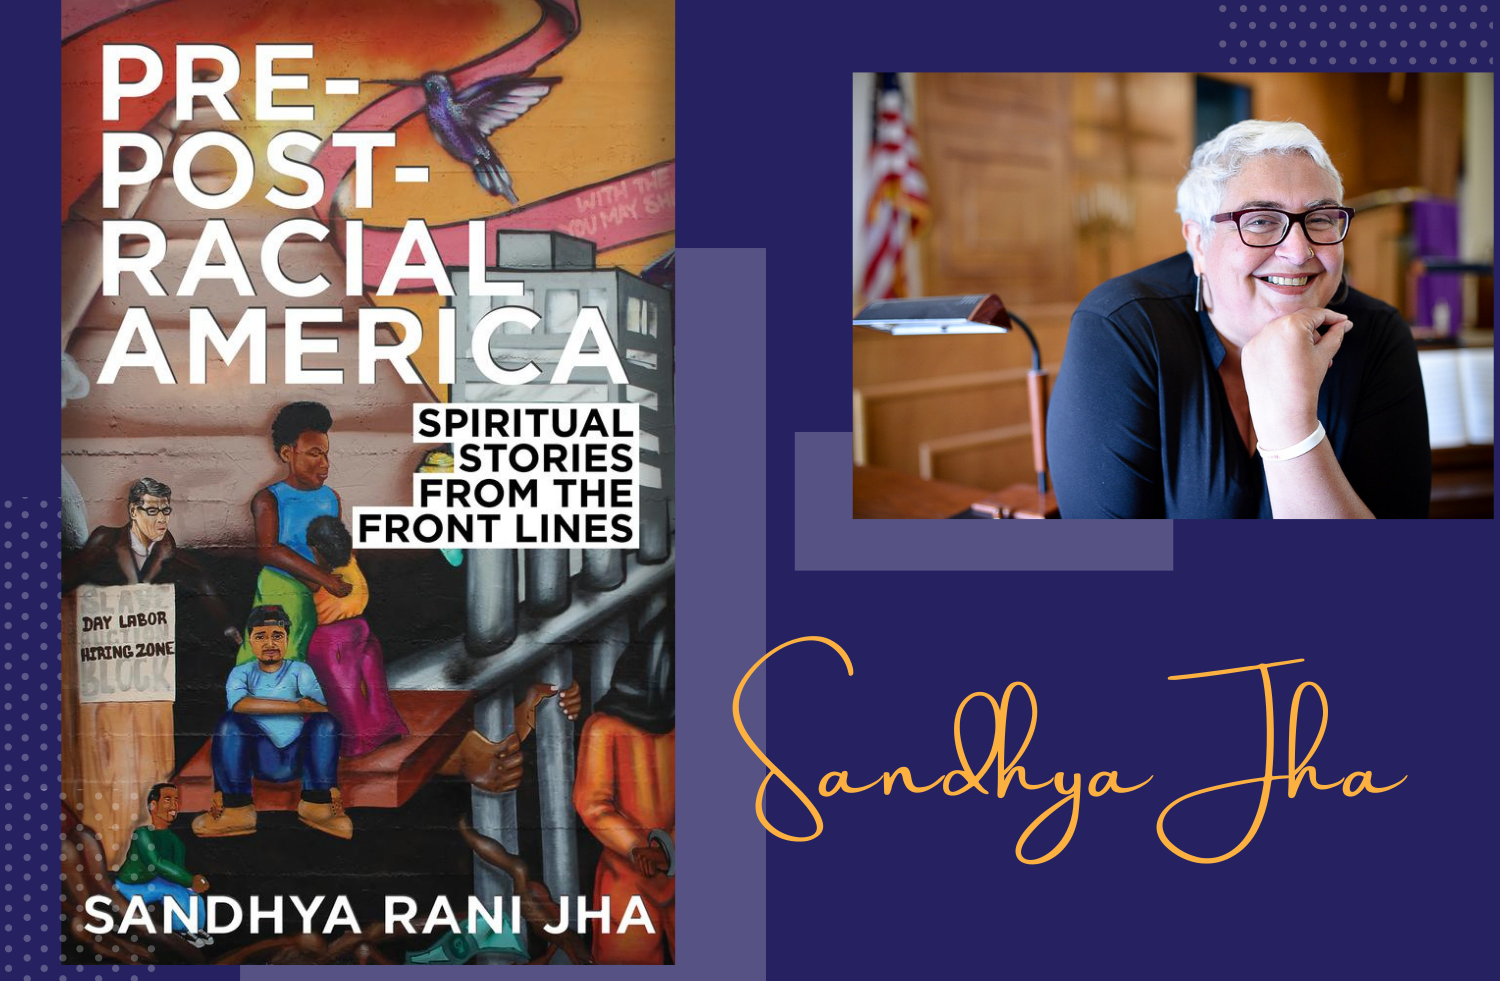 Pre-Post-Racial America by Sandhya Jha